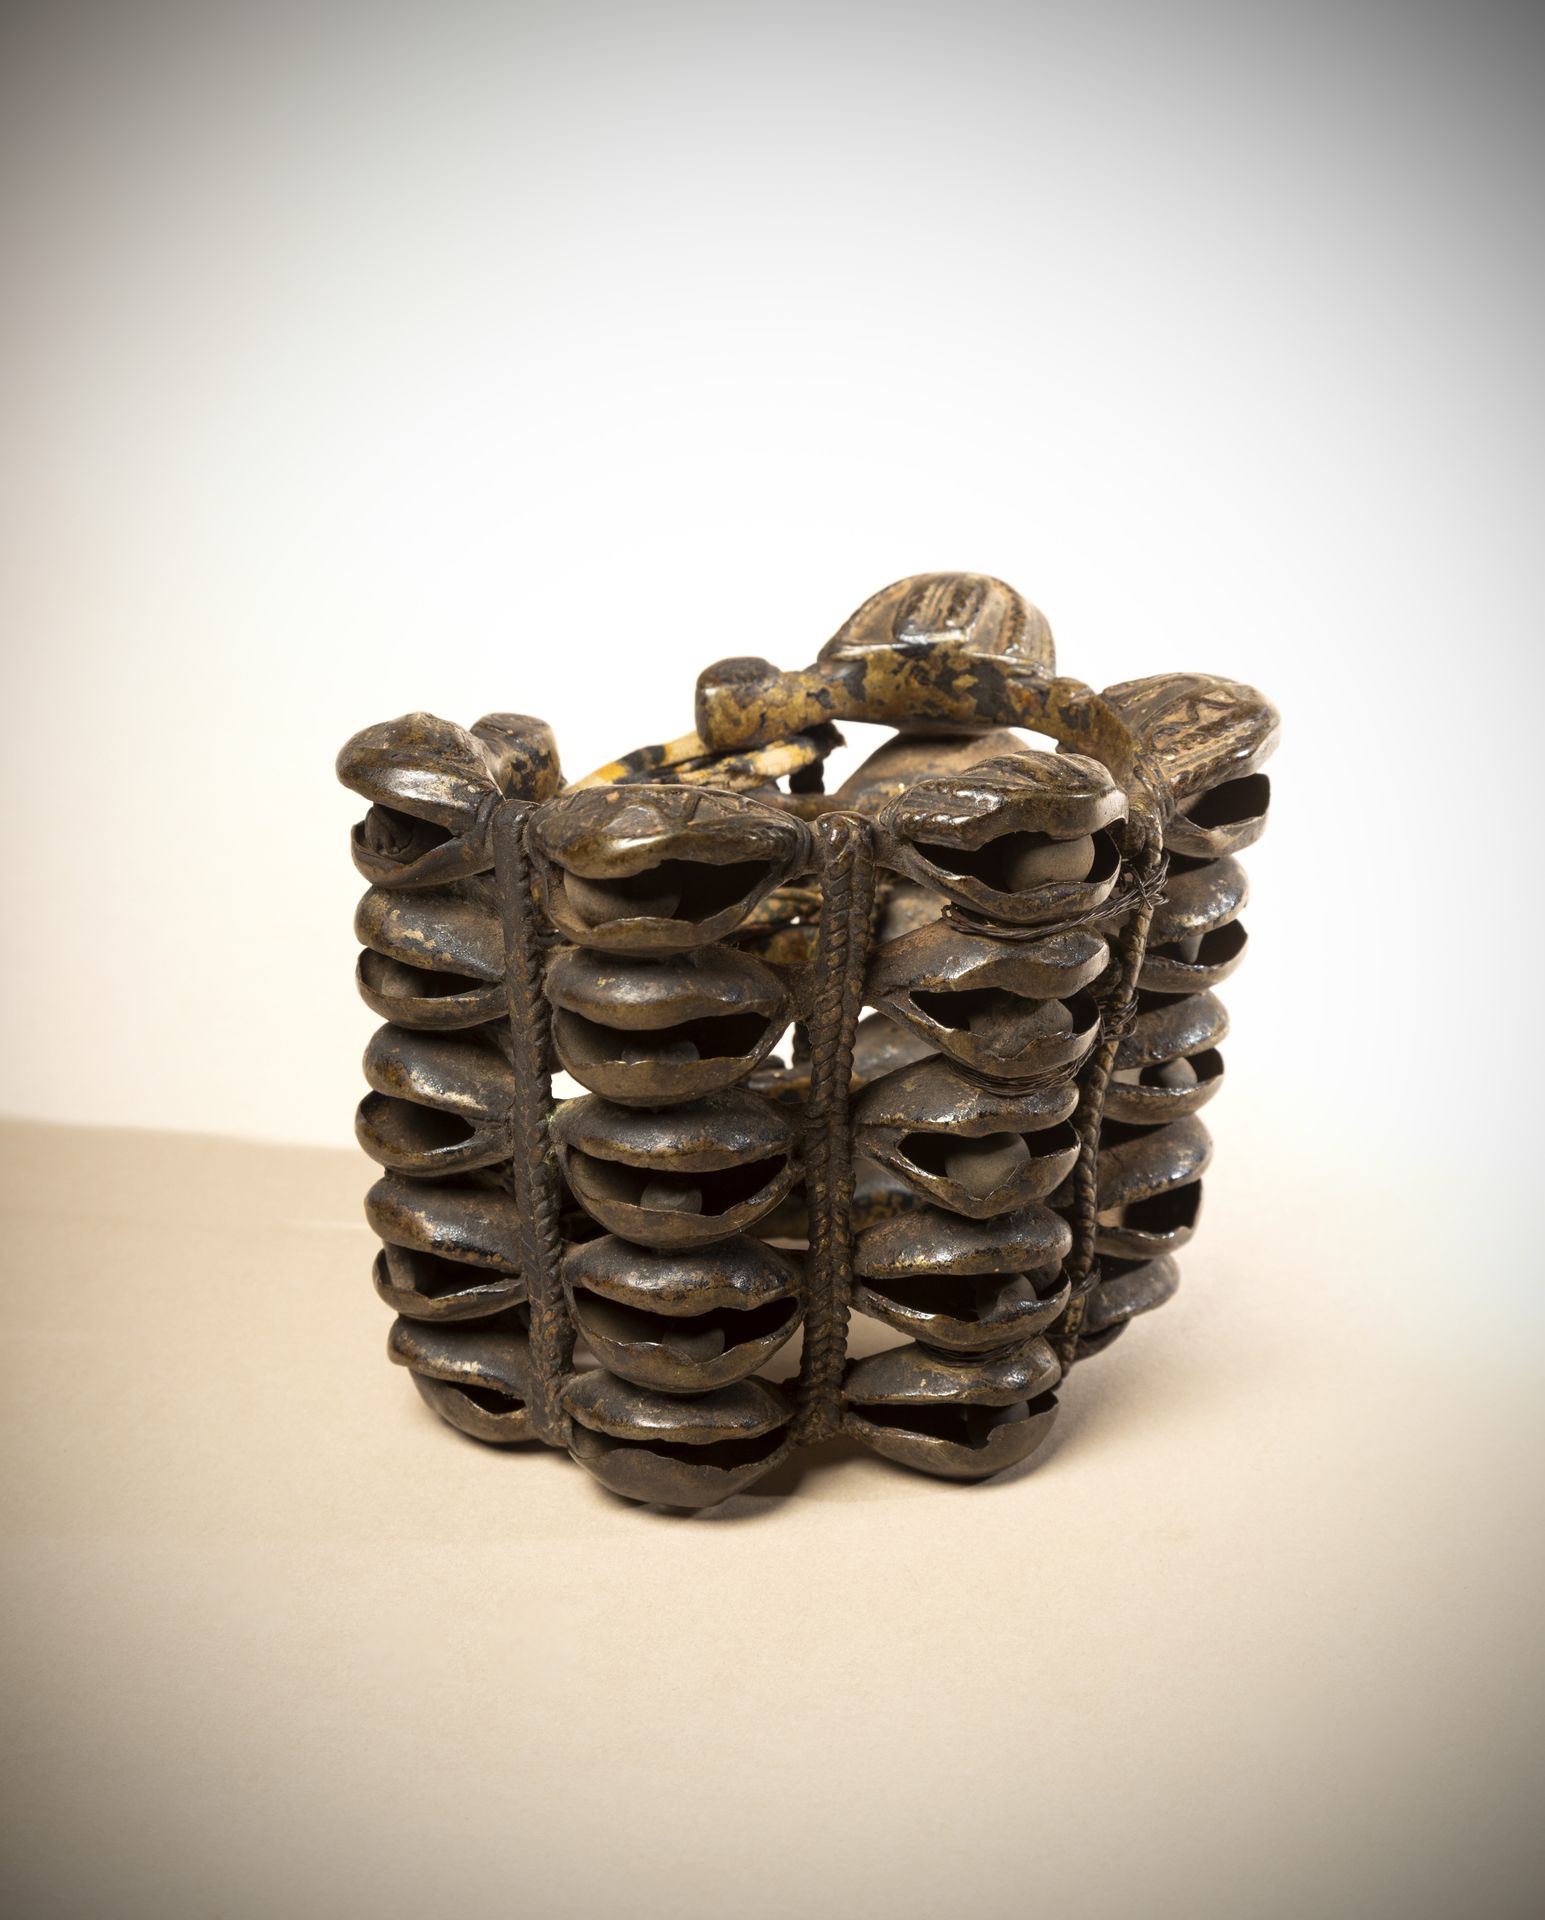 Null DAN / GIO (象牙海岸、利比里亚)

由五排铃铛连接而成的重要脚链，青铜材质，带有使用后的铜锈。

收藏E和G Betra

高度：11厘米